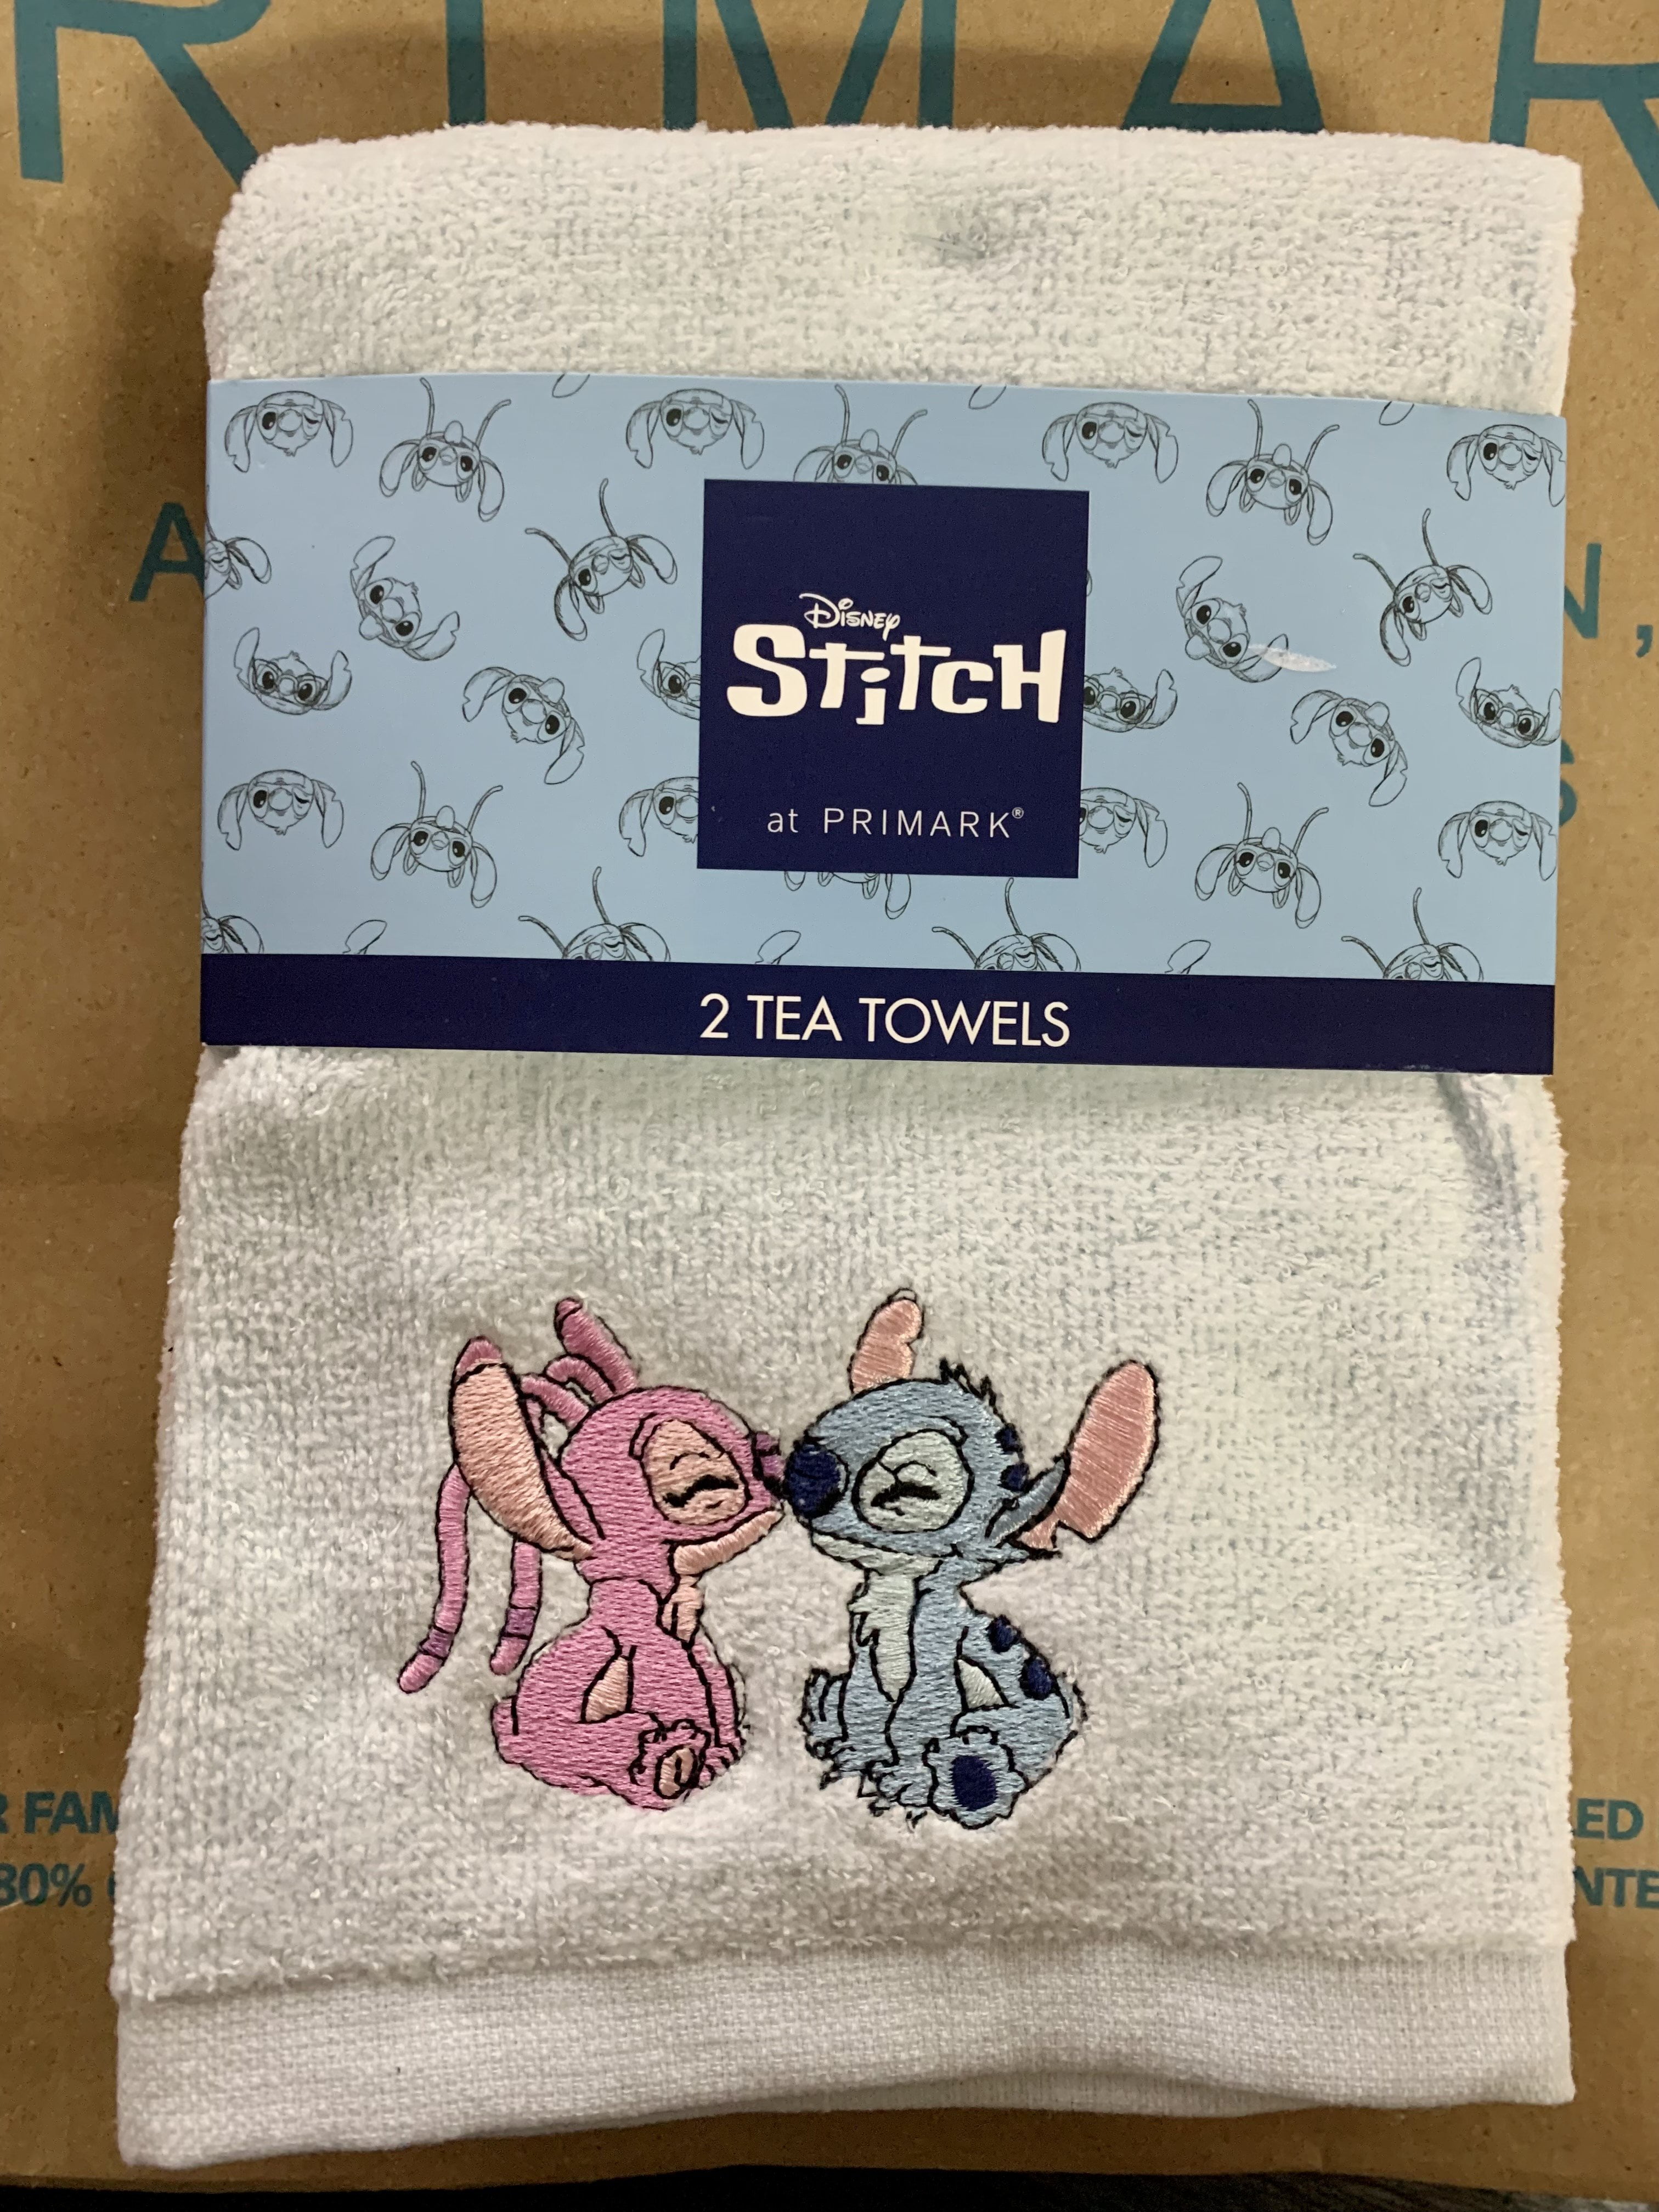 Disney Lilo & Stitch Set of 2 Tea Towels Primark Exclusive 